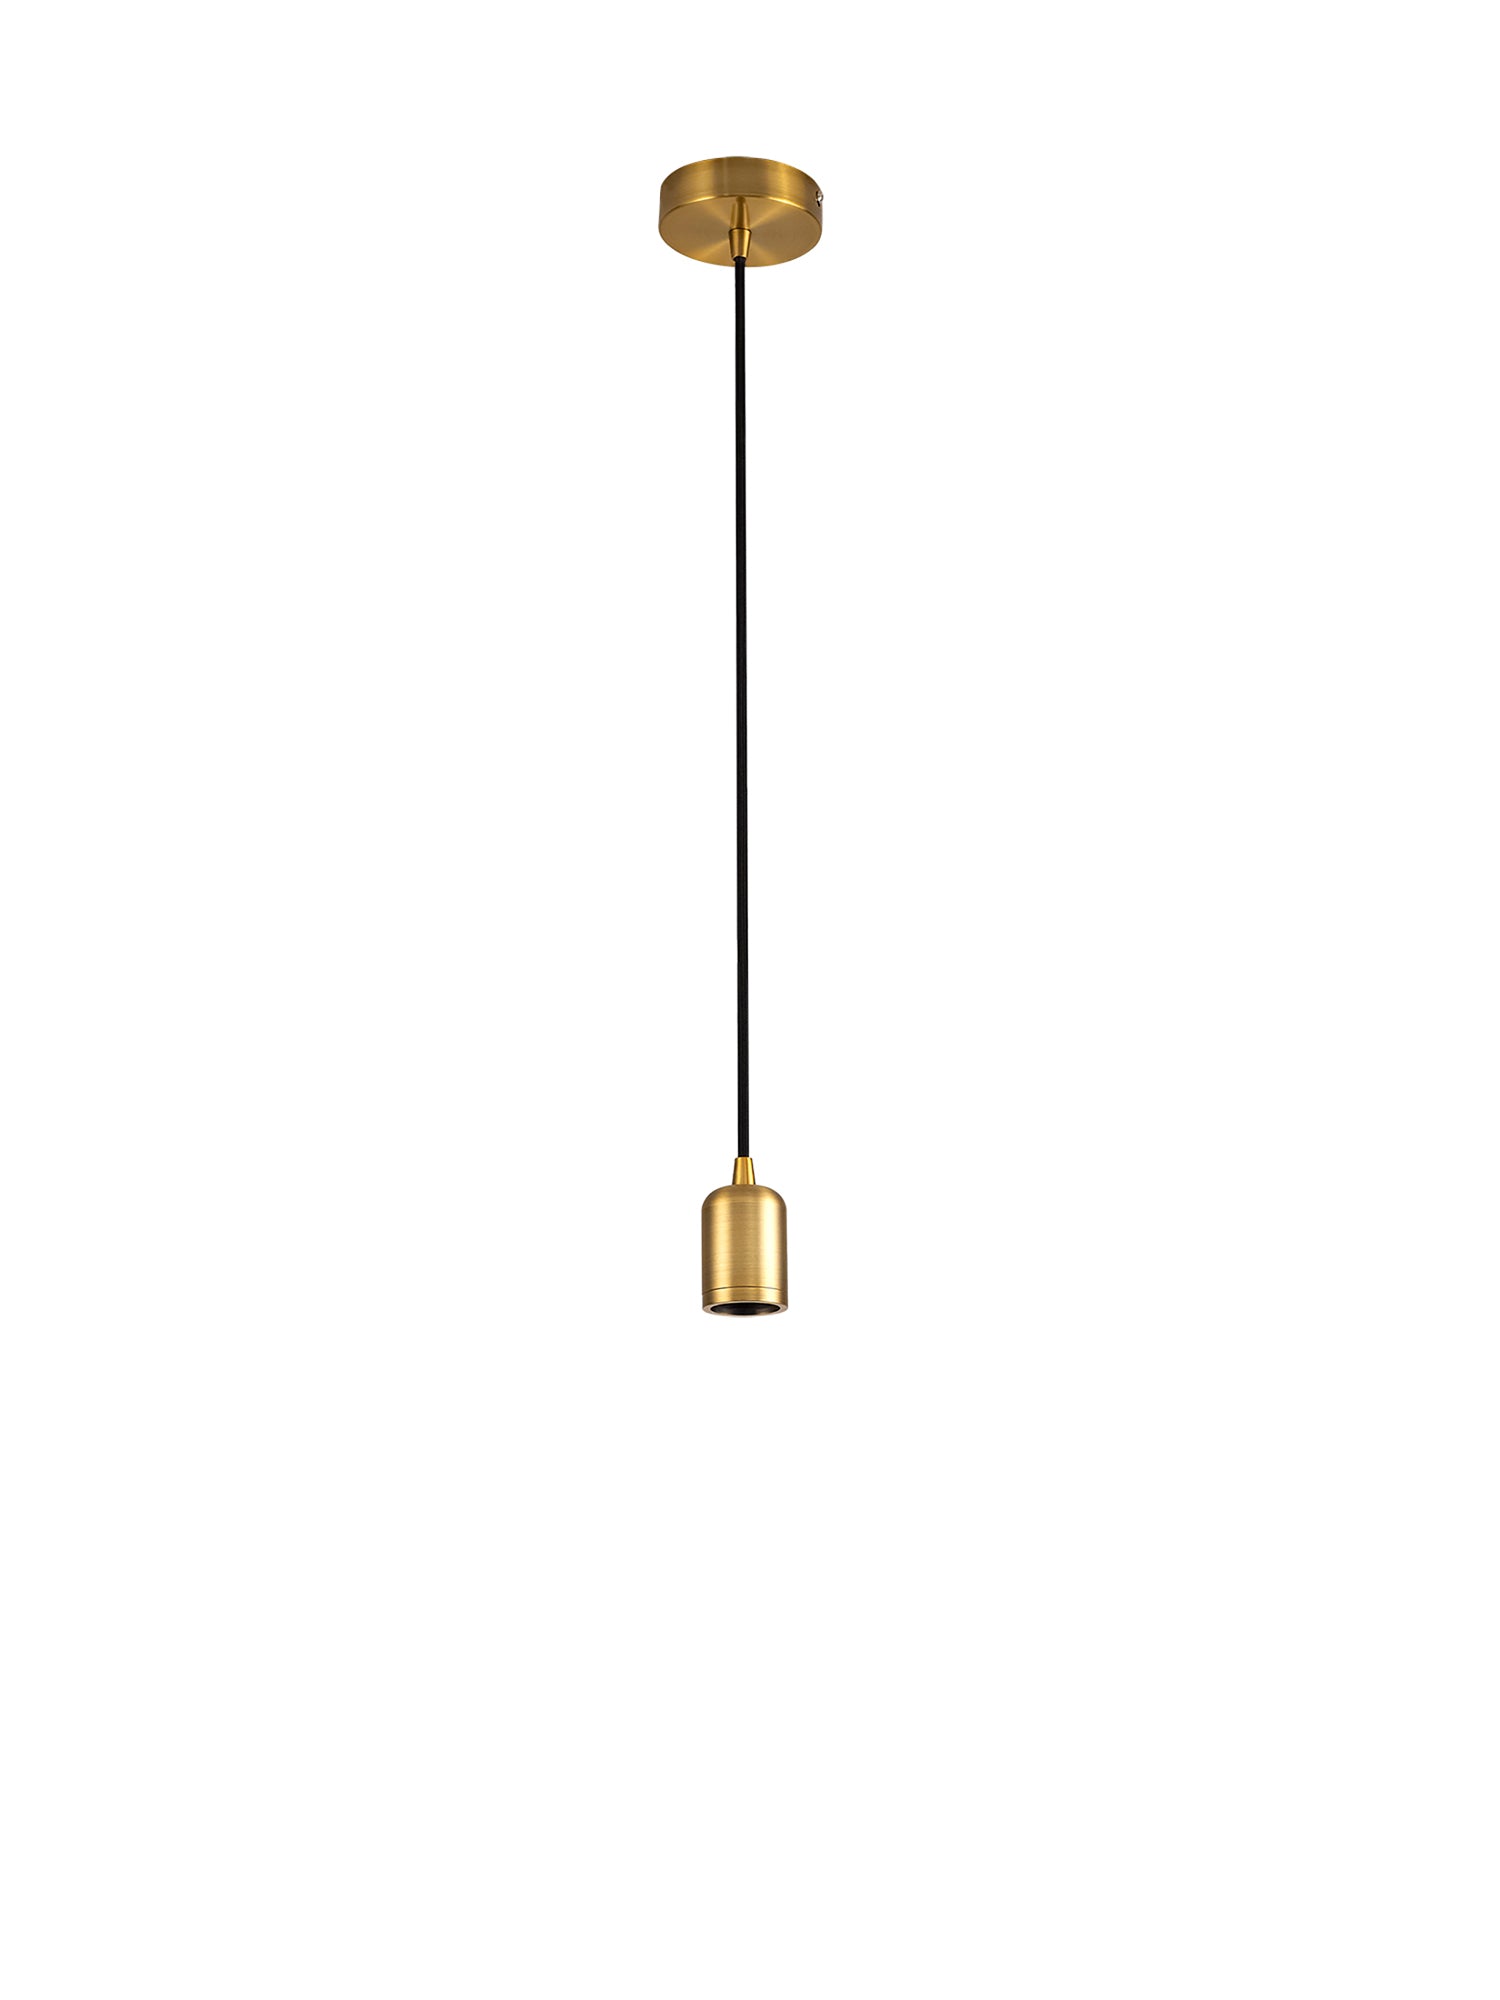 Arpeta 1m Suspension Kit 1 Light Gilt Bronze/Black Braided Cable, E27 Max 60W, c/w Ceiling Bracket